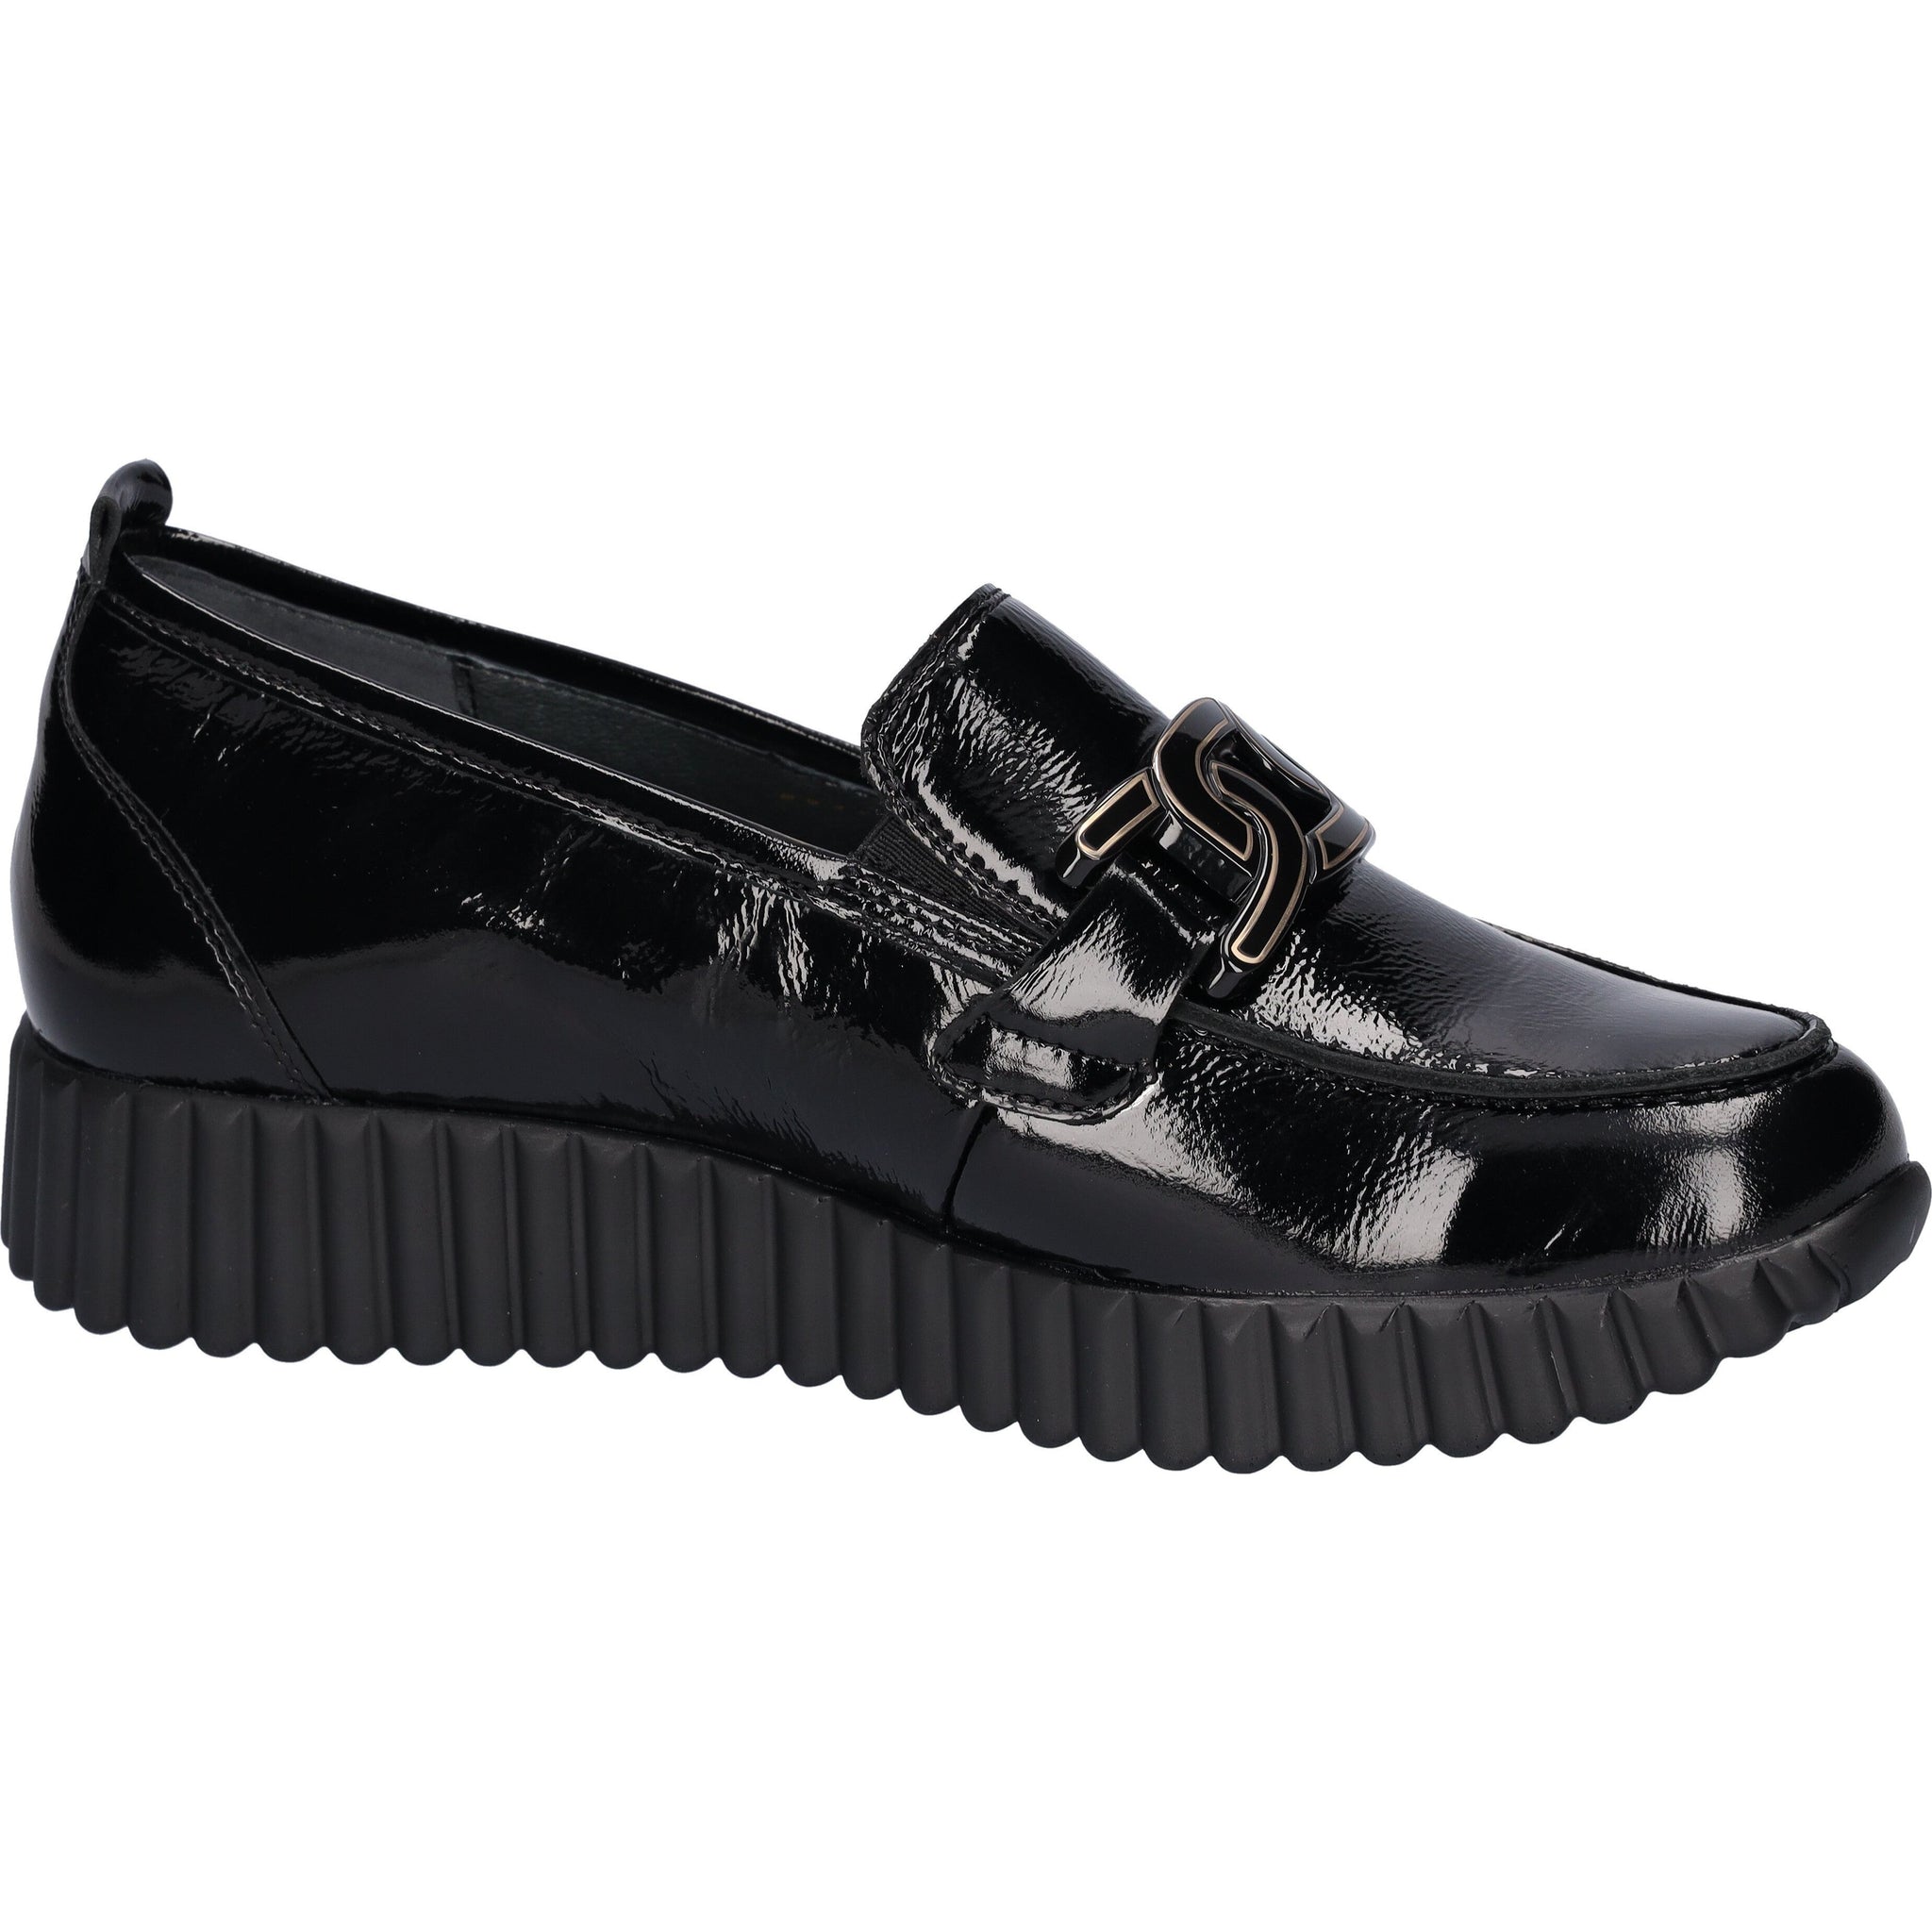 Waldlaufer H-Lorela (749504)- Ladies Loafer in Black Patent| Waldlaufer | Wide Fit Shoes | Wisemans | Bantry | Shoe Shop | West Cork | Munster | Ireland